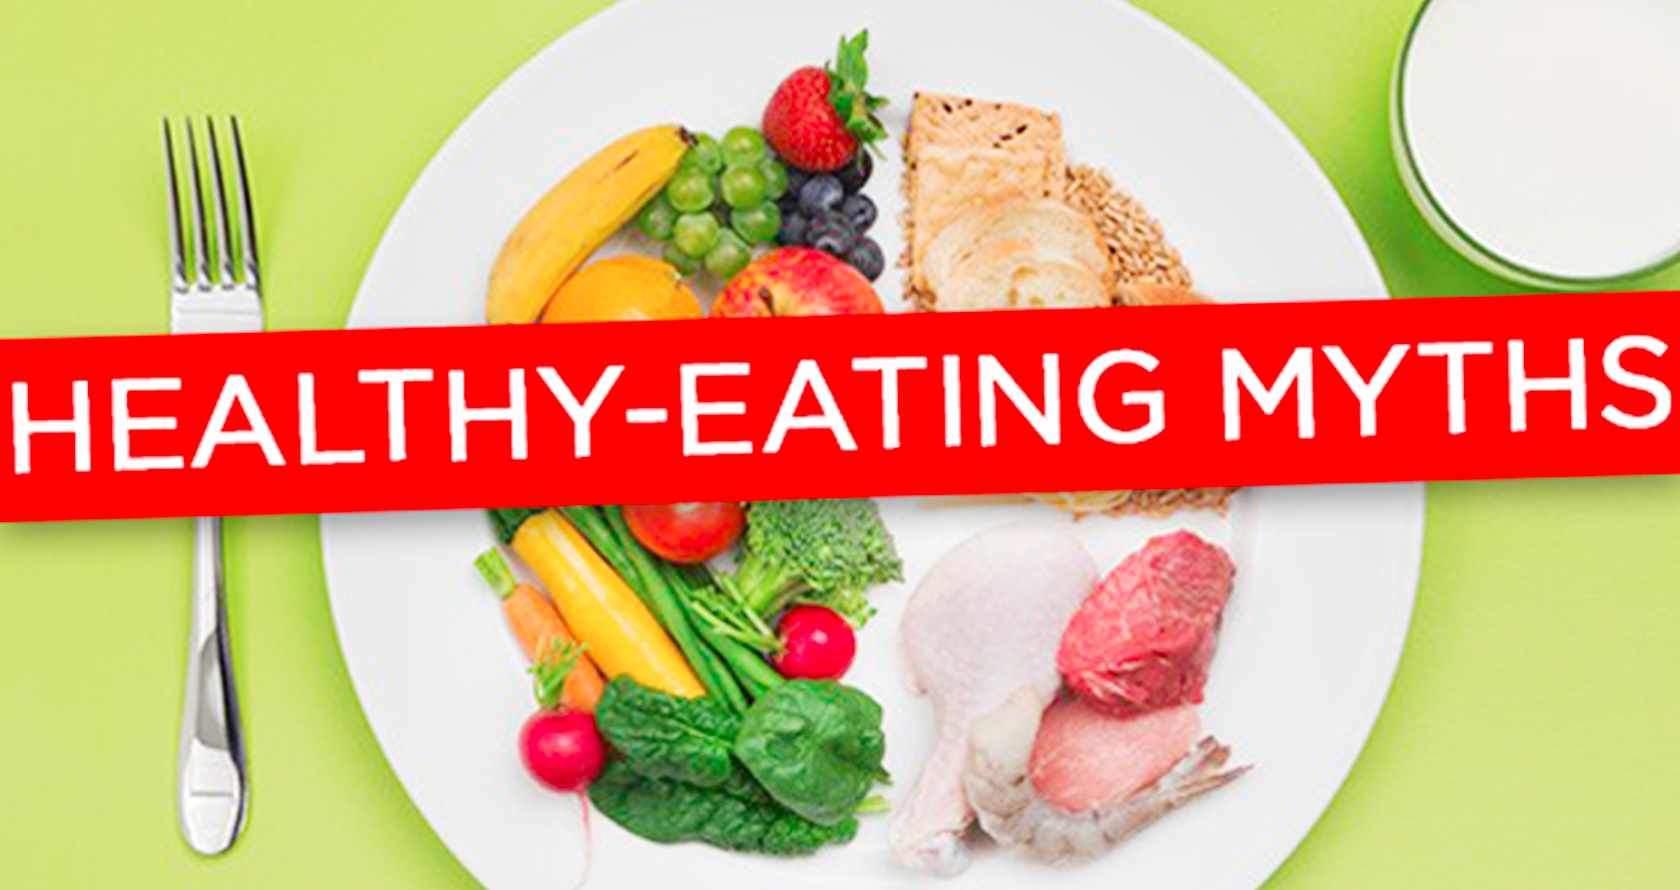 Breaking nutrition myths